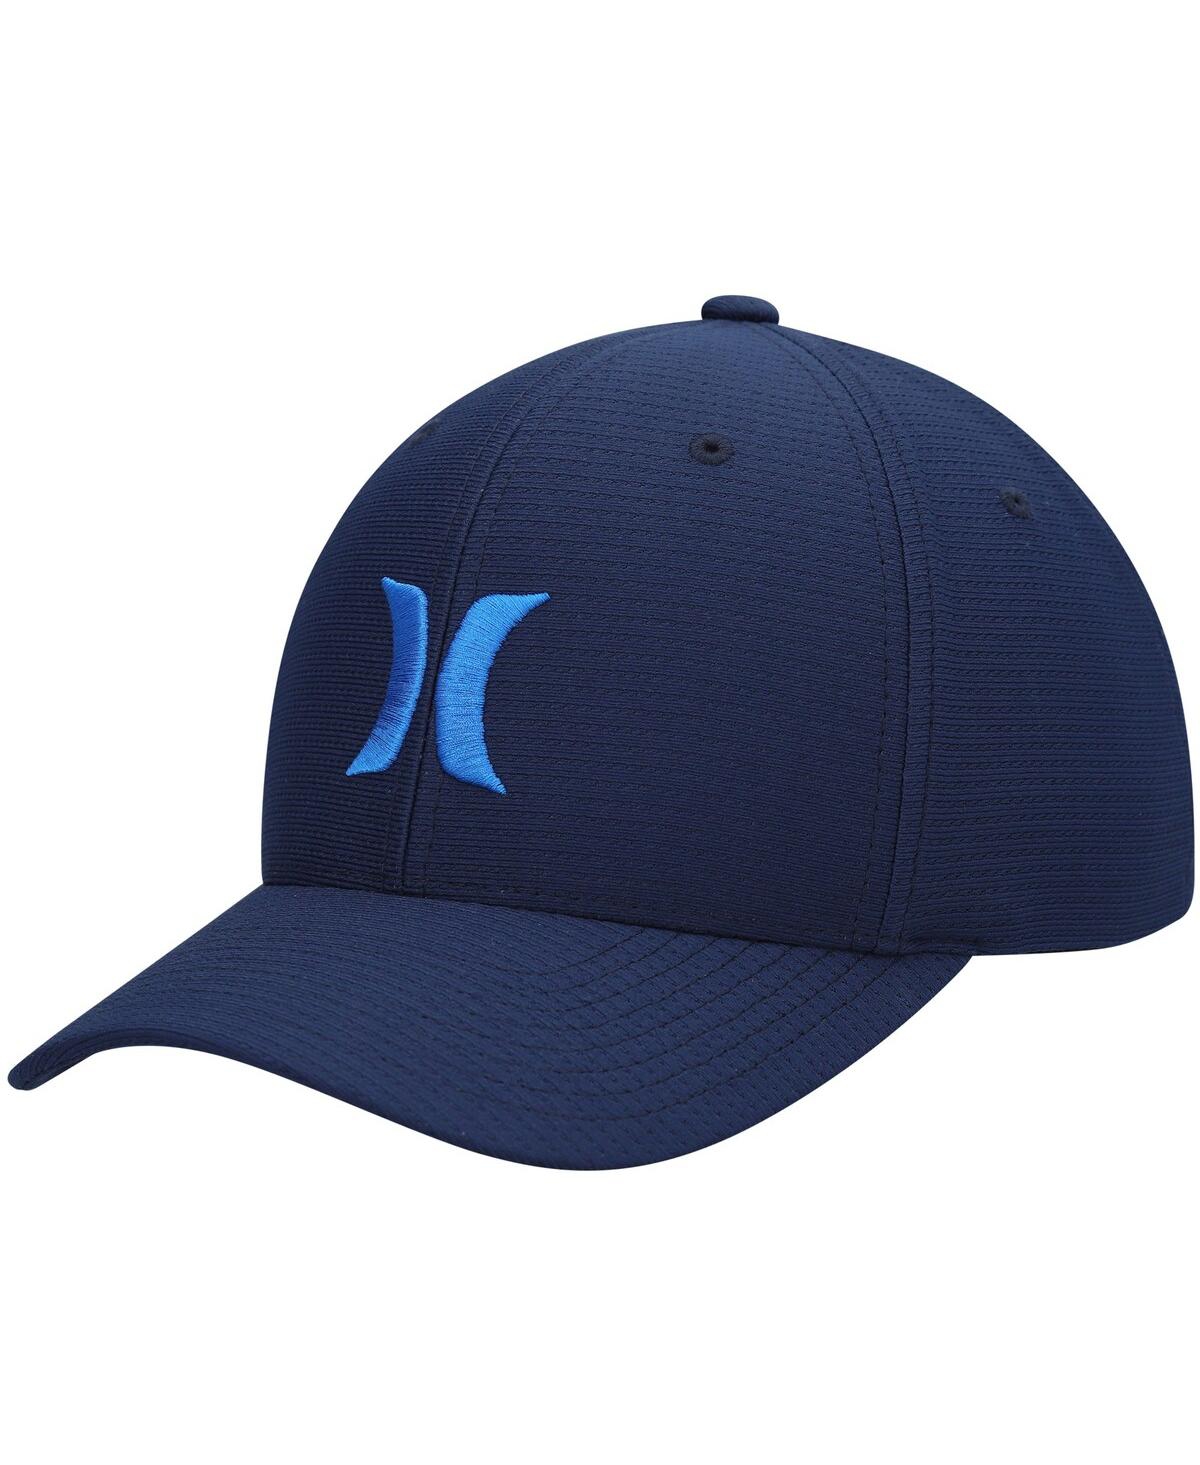 Men's Hurley Blue H2O-Dri Pismo Flex Fit Hat - Blue